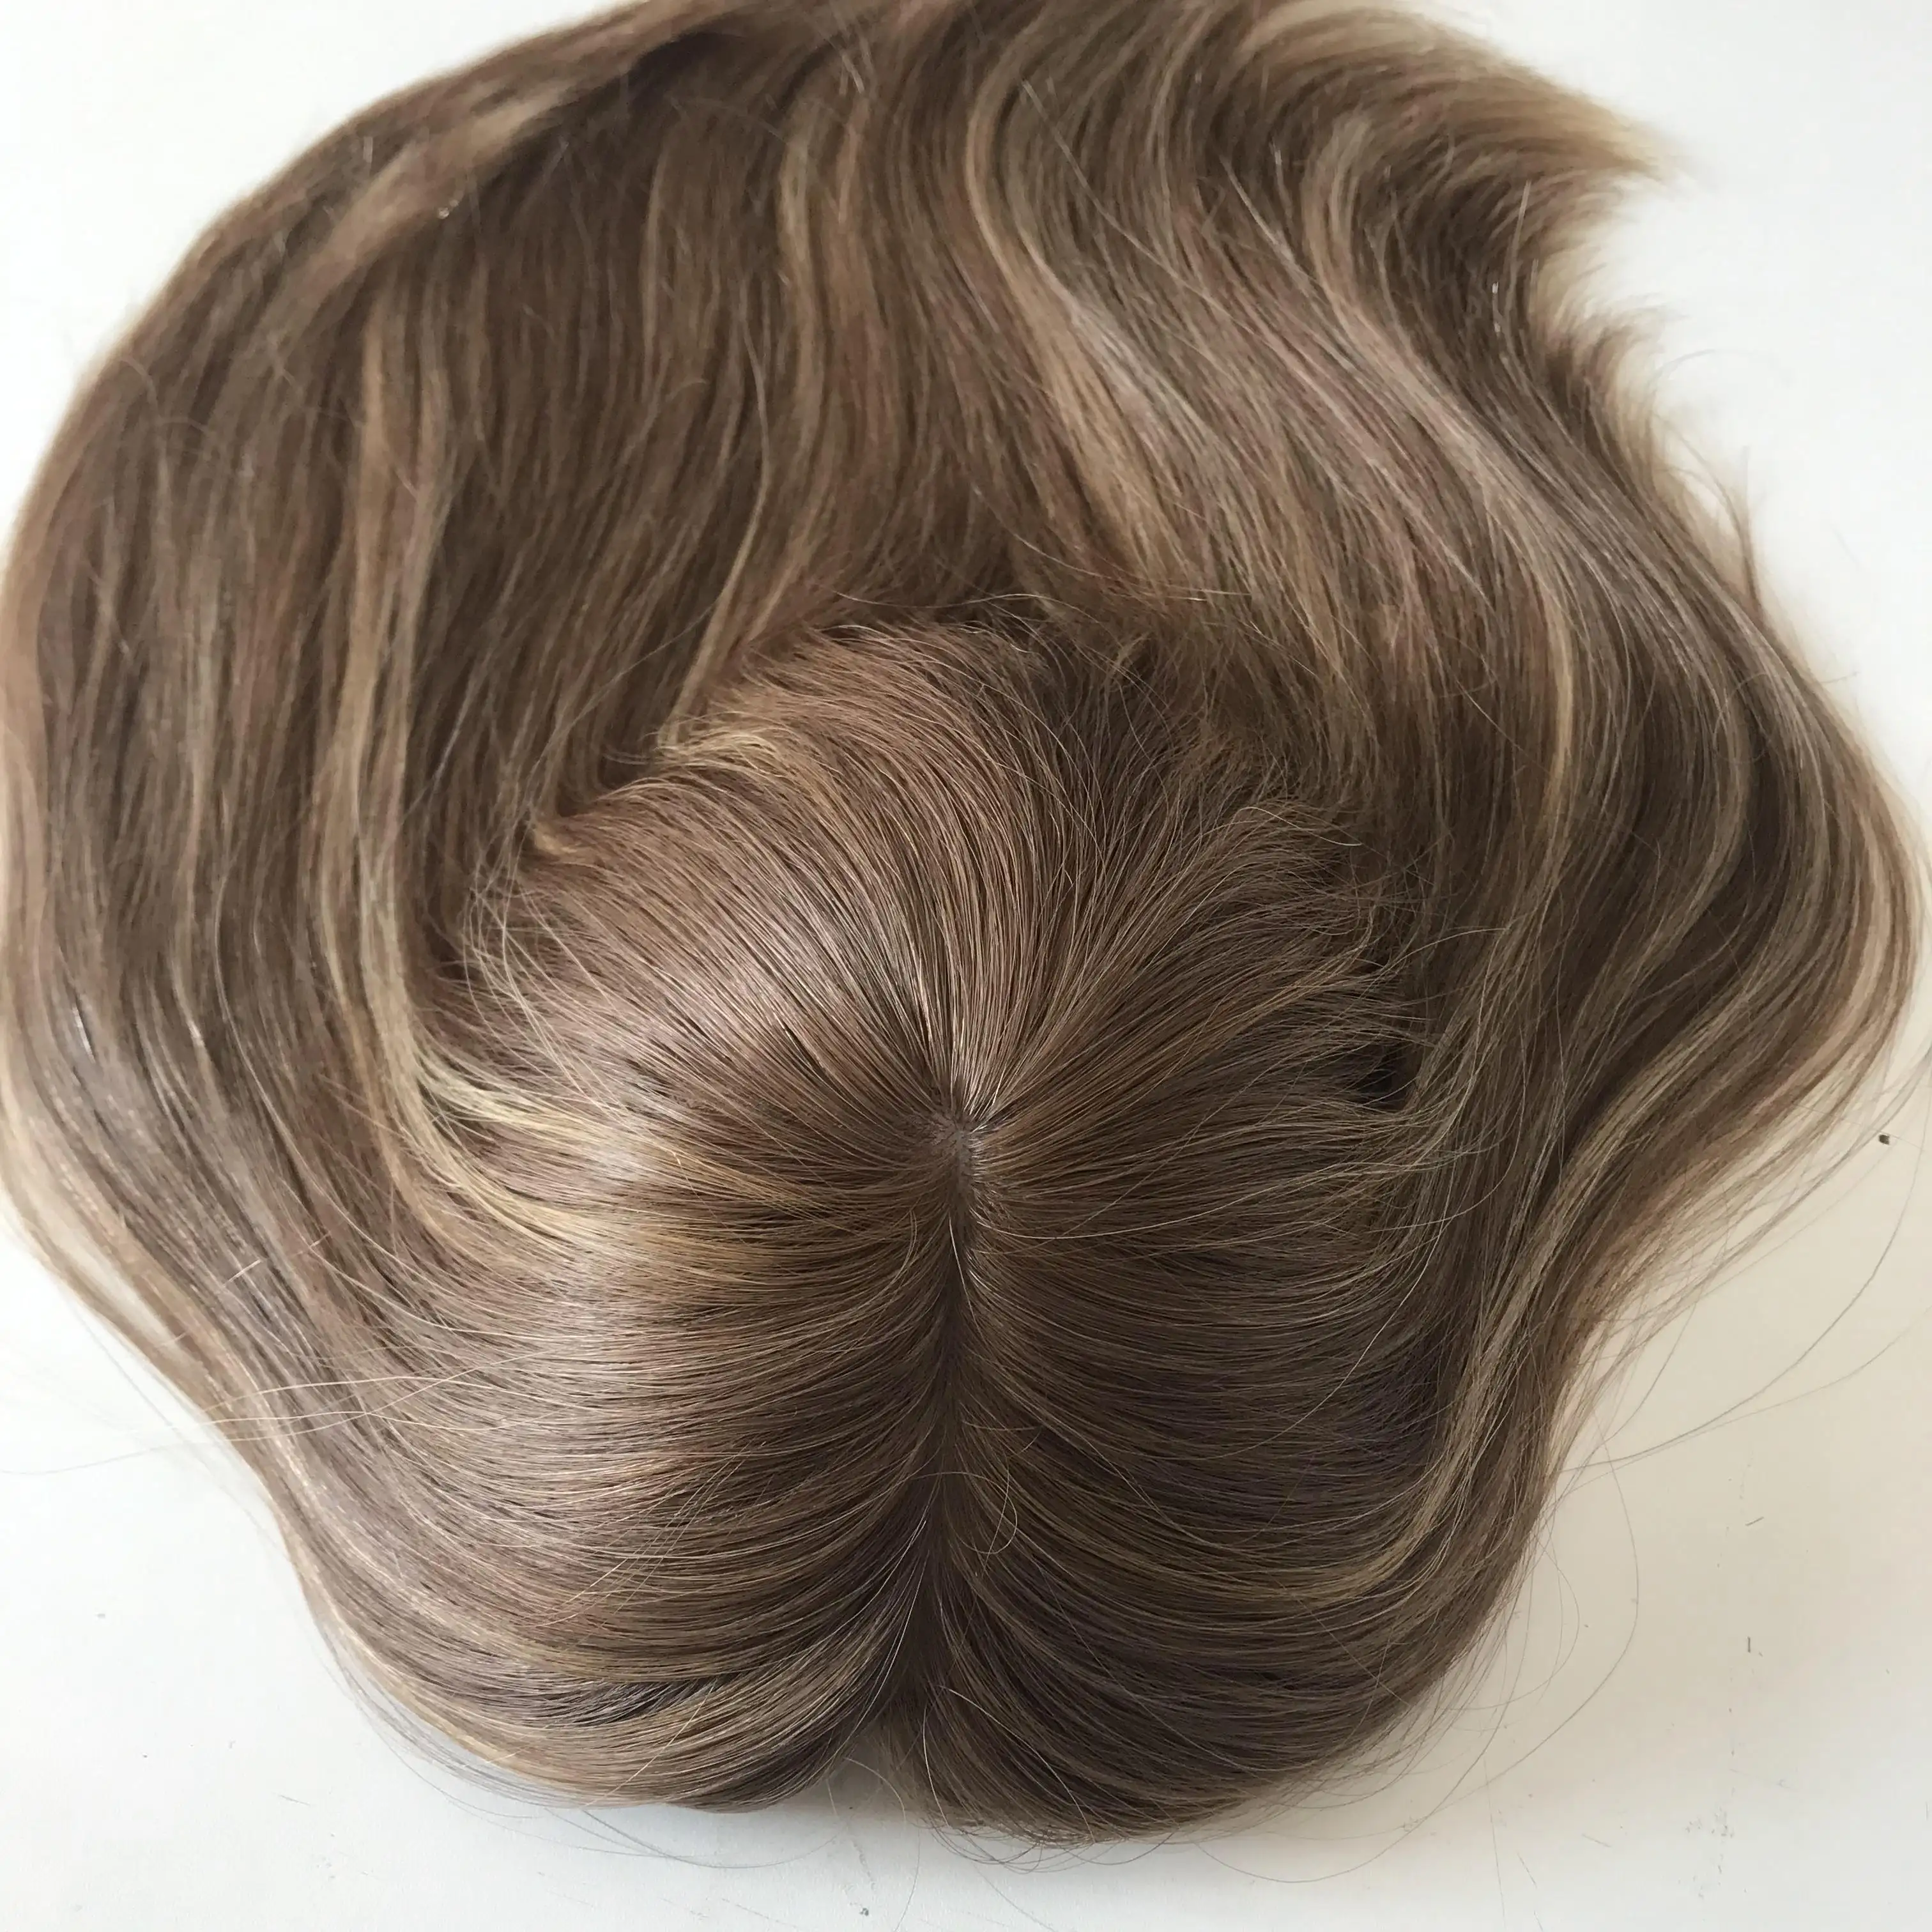 LBW Qingdao Wholesale Luxury European Human Hair Woman kosher Skin Top Kippa Fall Jewish Silk Topper